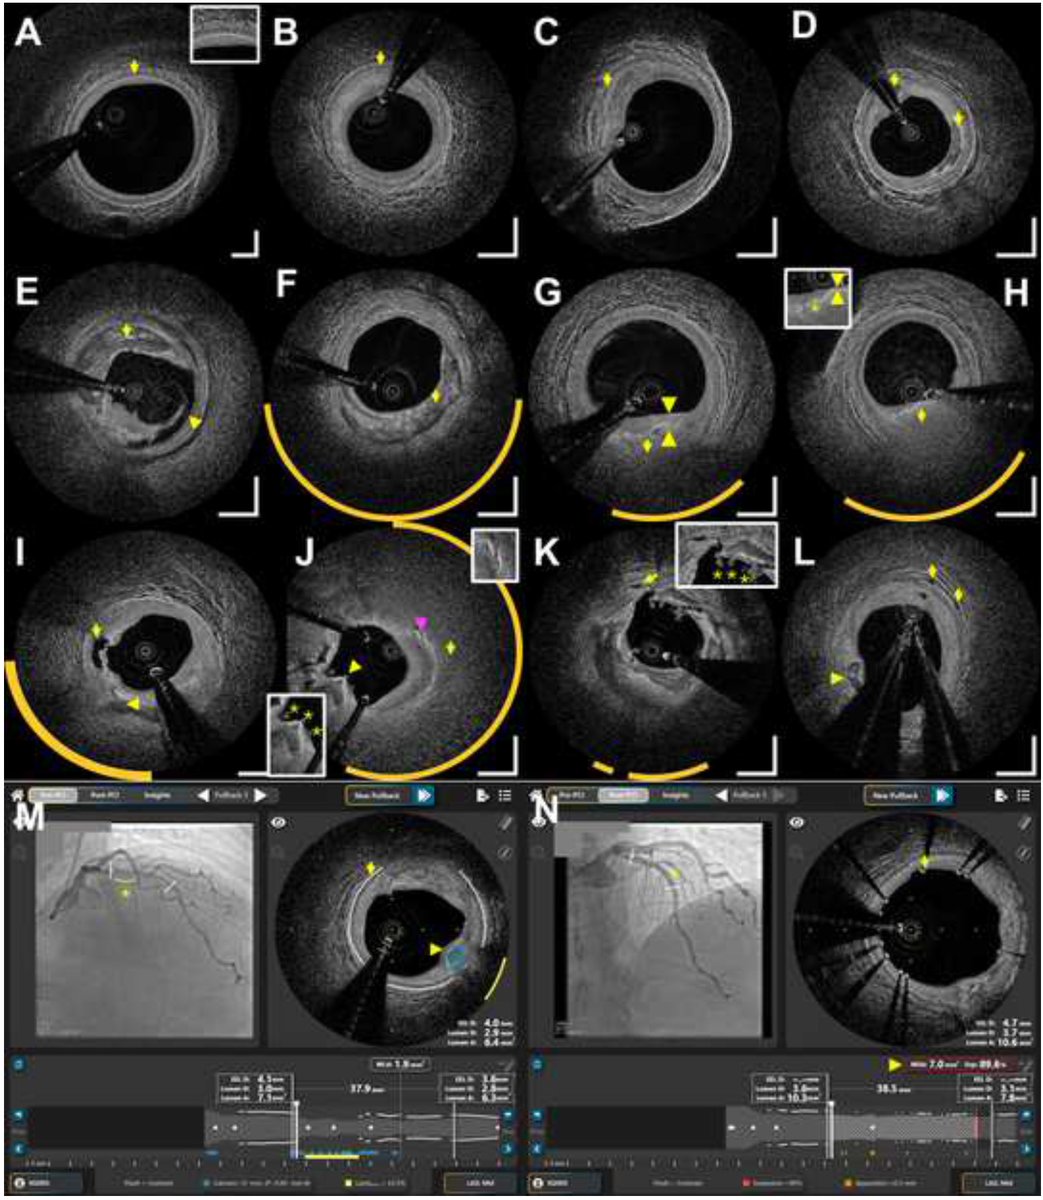 🗣️📢Presented at #SIF2024 - FIH experience w novel multi-modality #DEEPOCT #NIRS intravascular imaging system including image comparisons to #OCT & HD-IVUS. #ImageFirst

➡️doi.org/10.1016/j.jsca…

@ziadalinyc @GreggWStone @DrJMHill @DrChuckSimonton